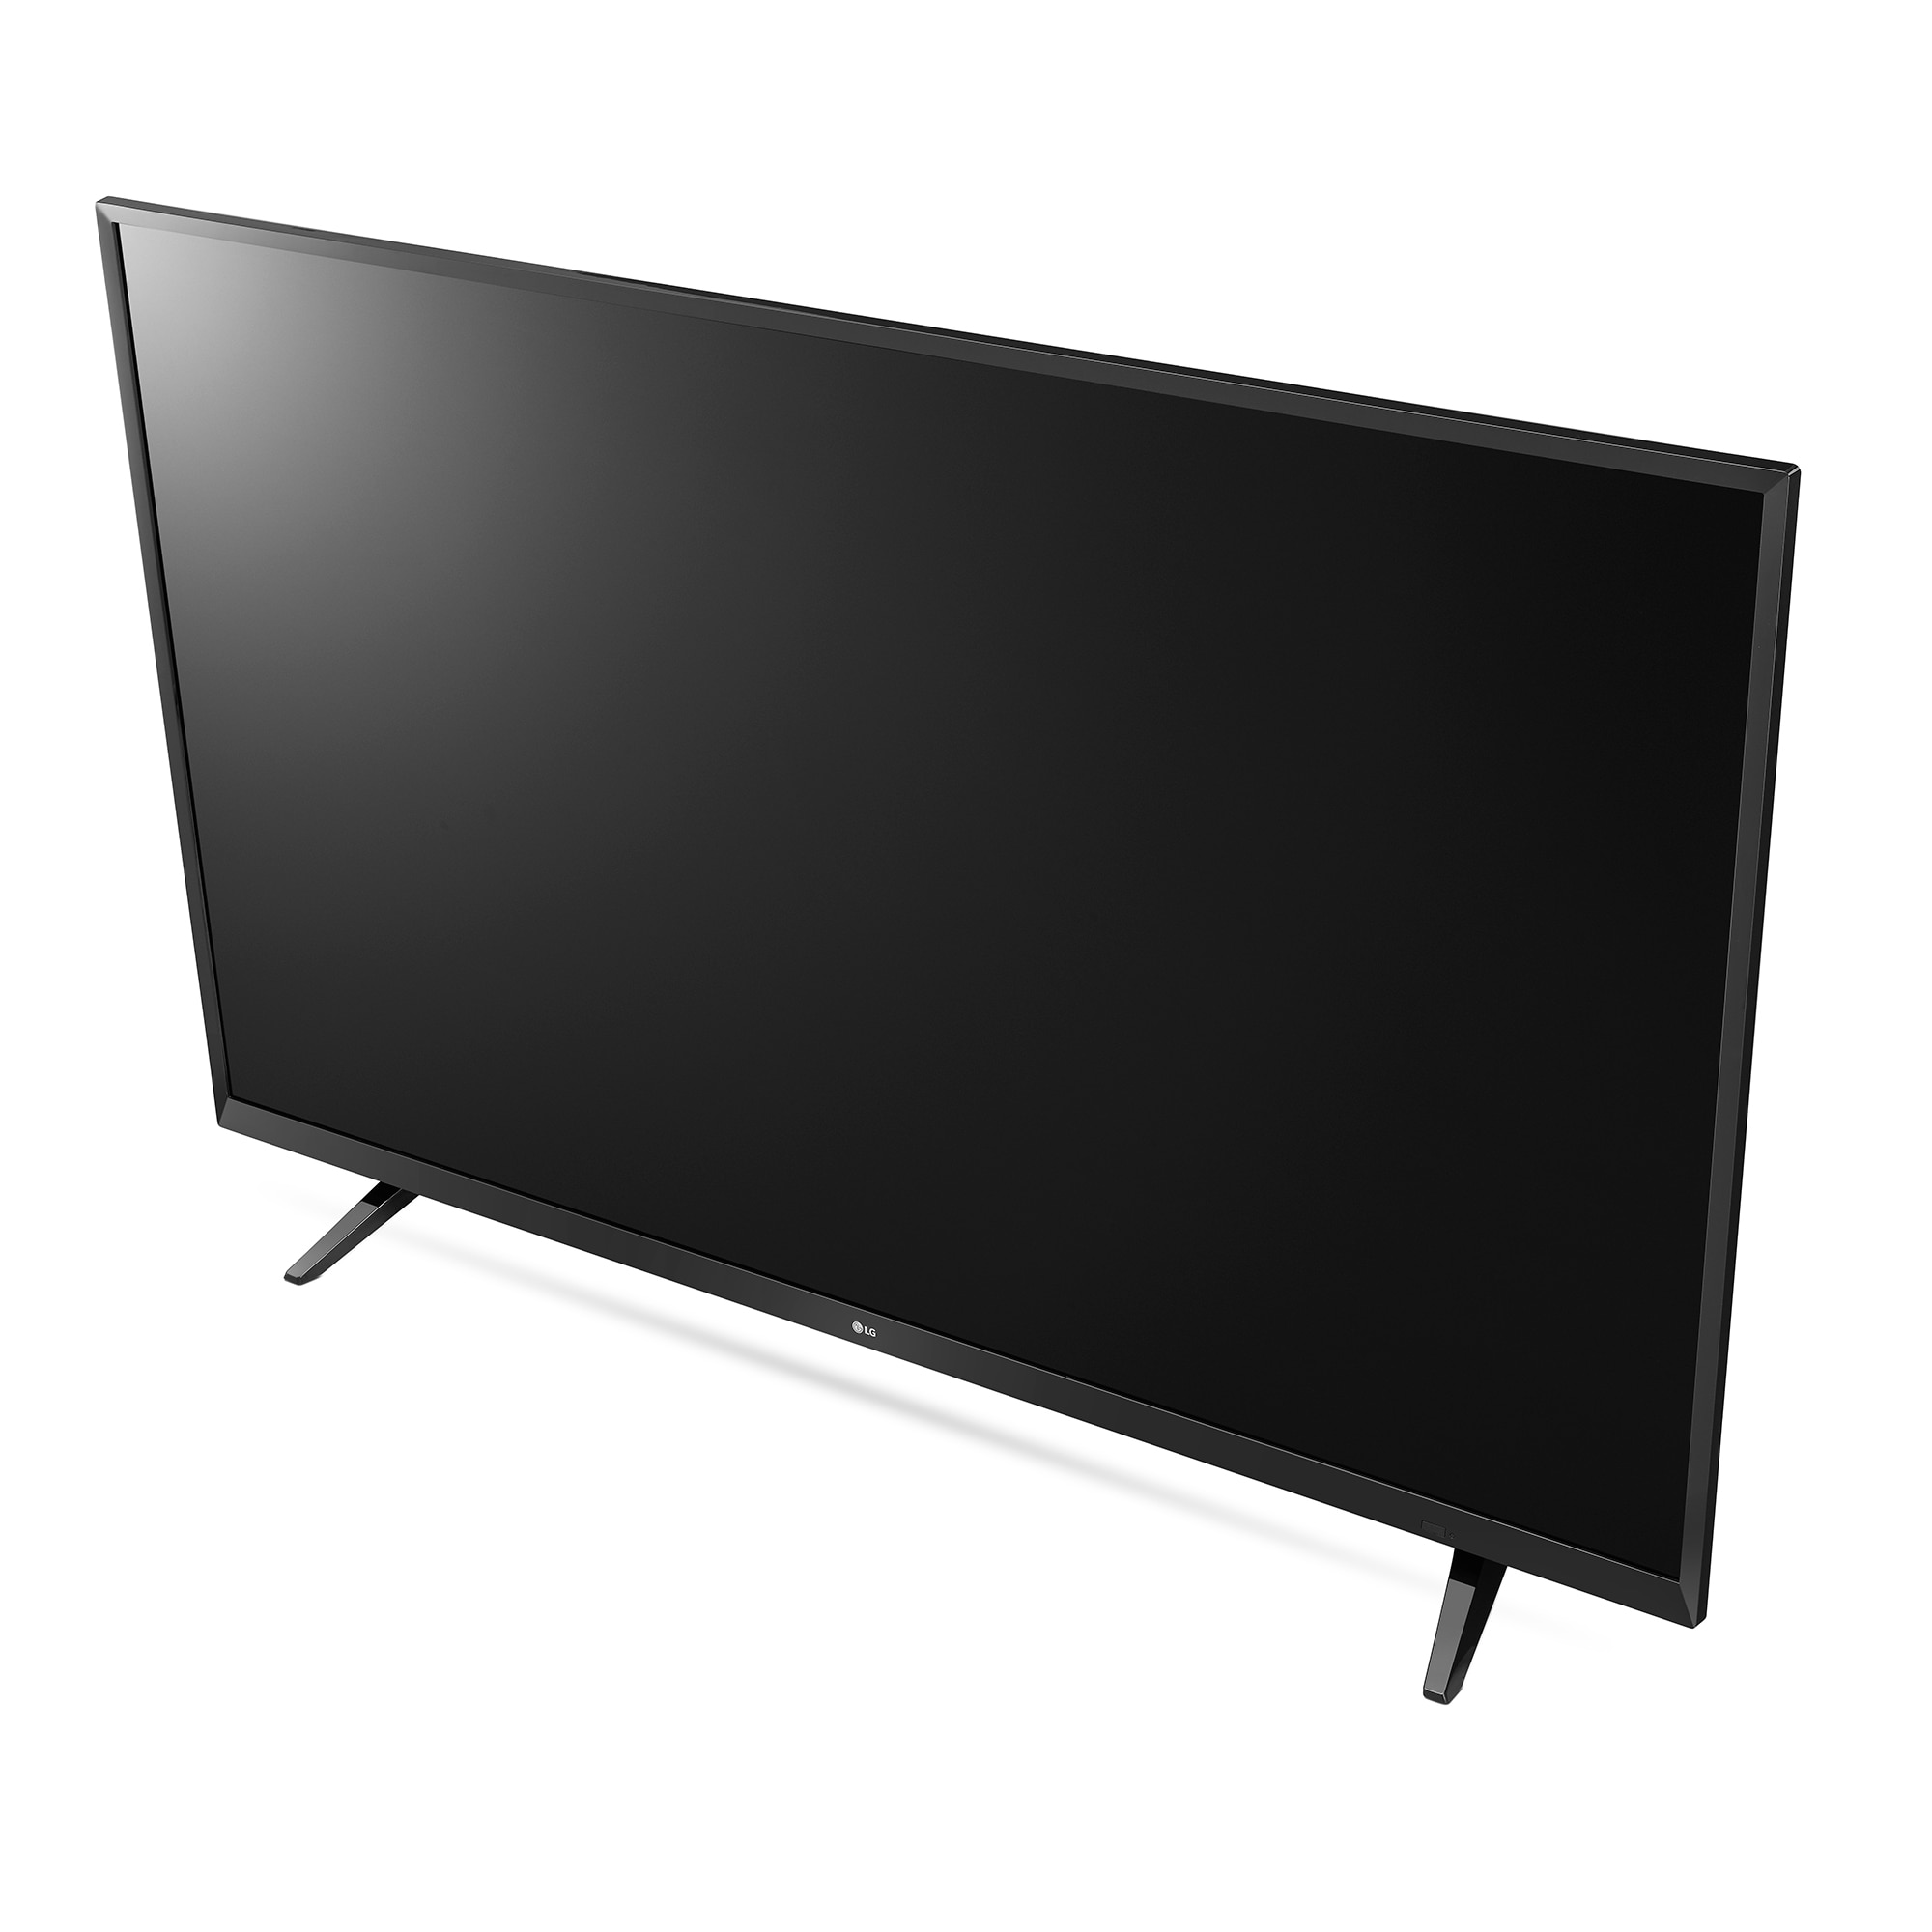 Televizor LED Smart LG, 123 cm, 49UJ620V, Ultra HD, Clasa A+ - eMAG.ro